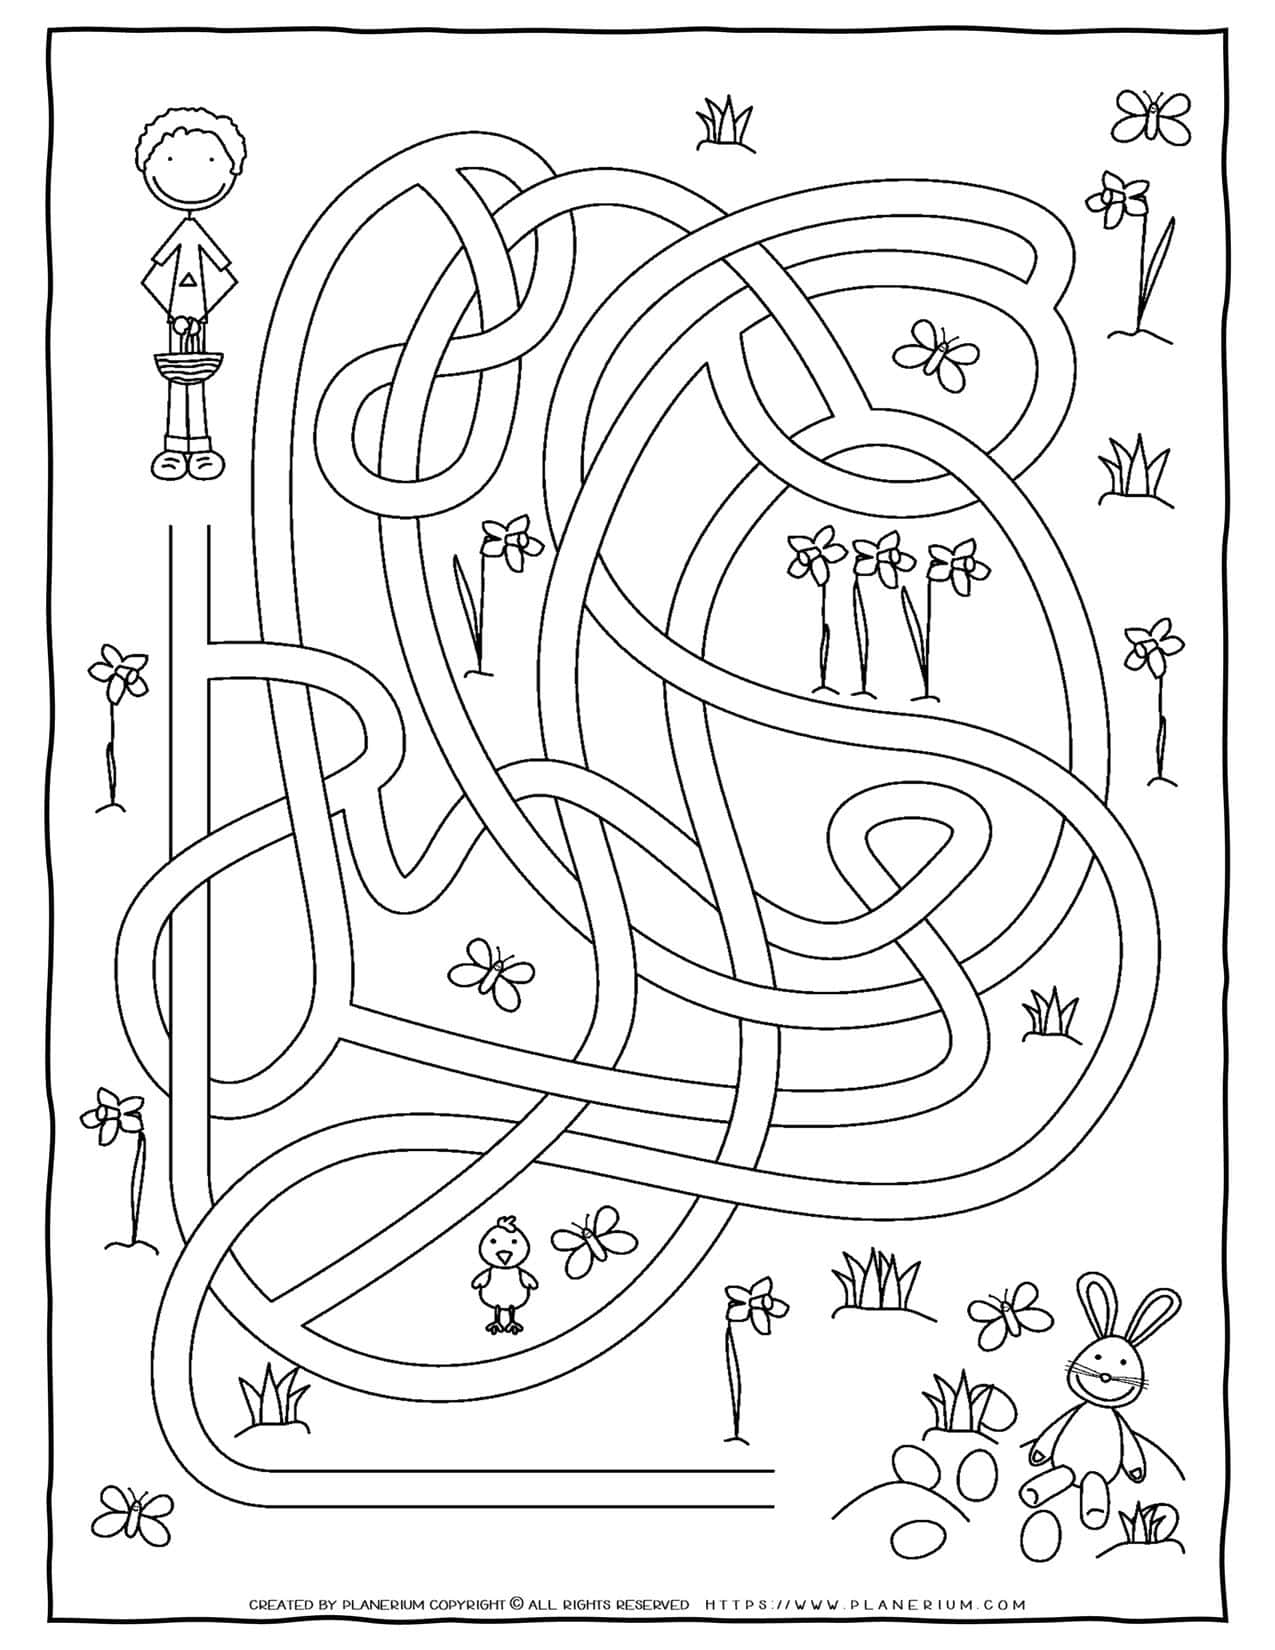 Maze Game - Easter Hunt | Planerium